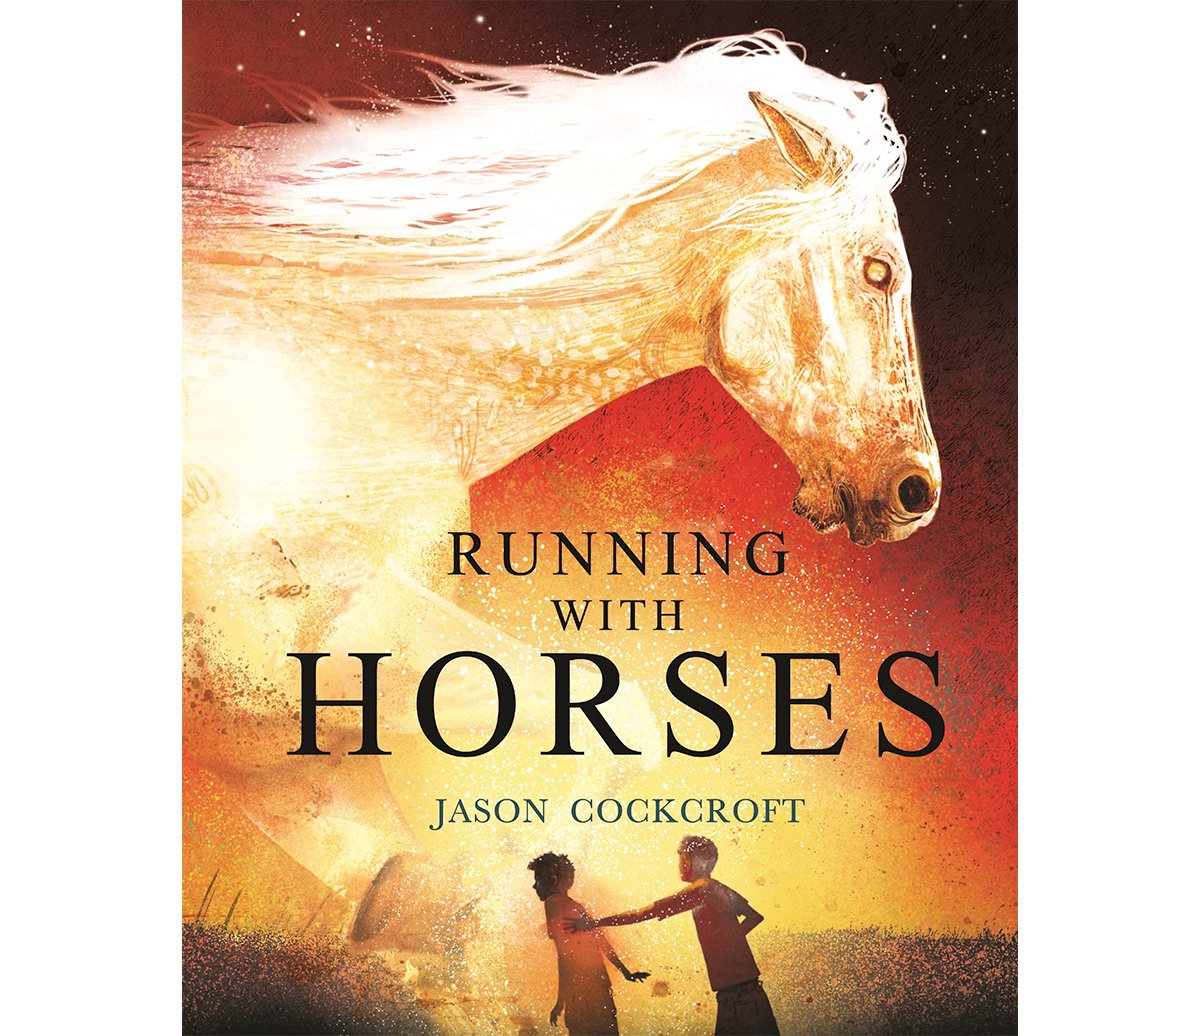 jason-cockcroft-running-with-horses.jpg